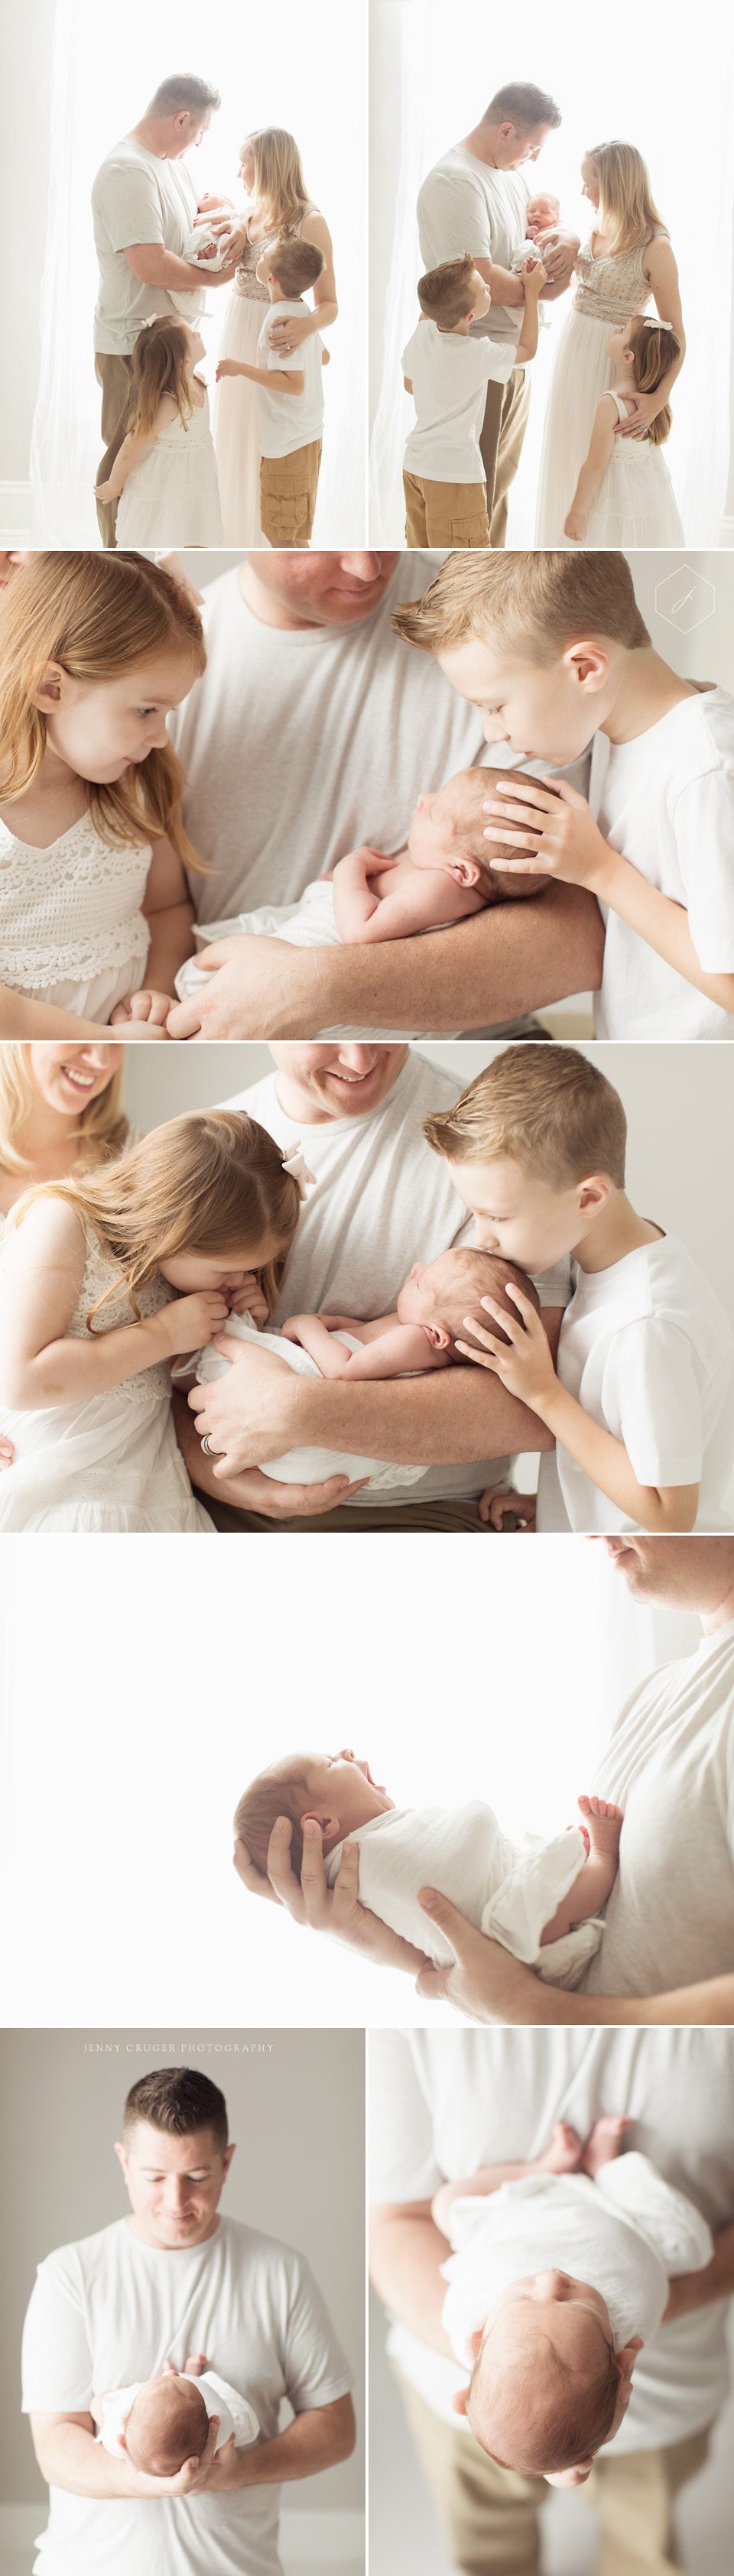 nashville newborn photographer | siblings kissing newborn 